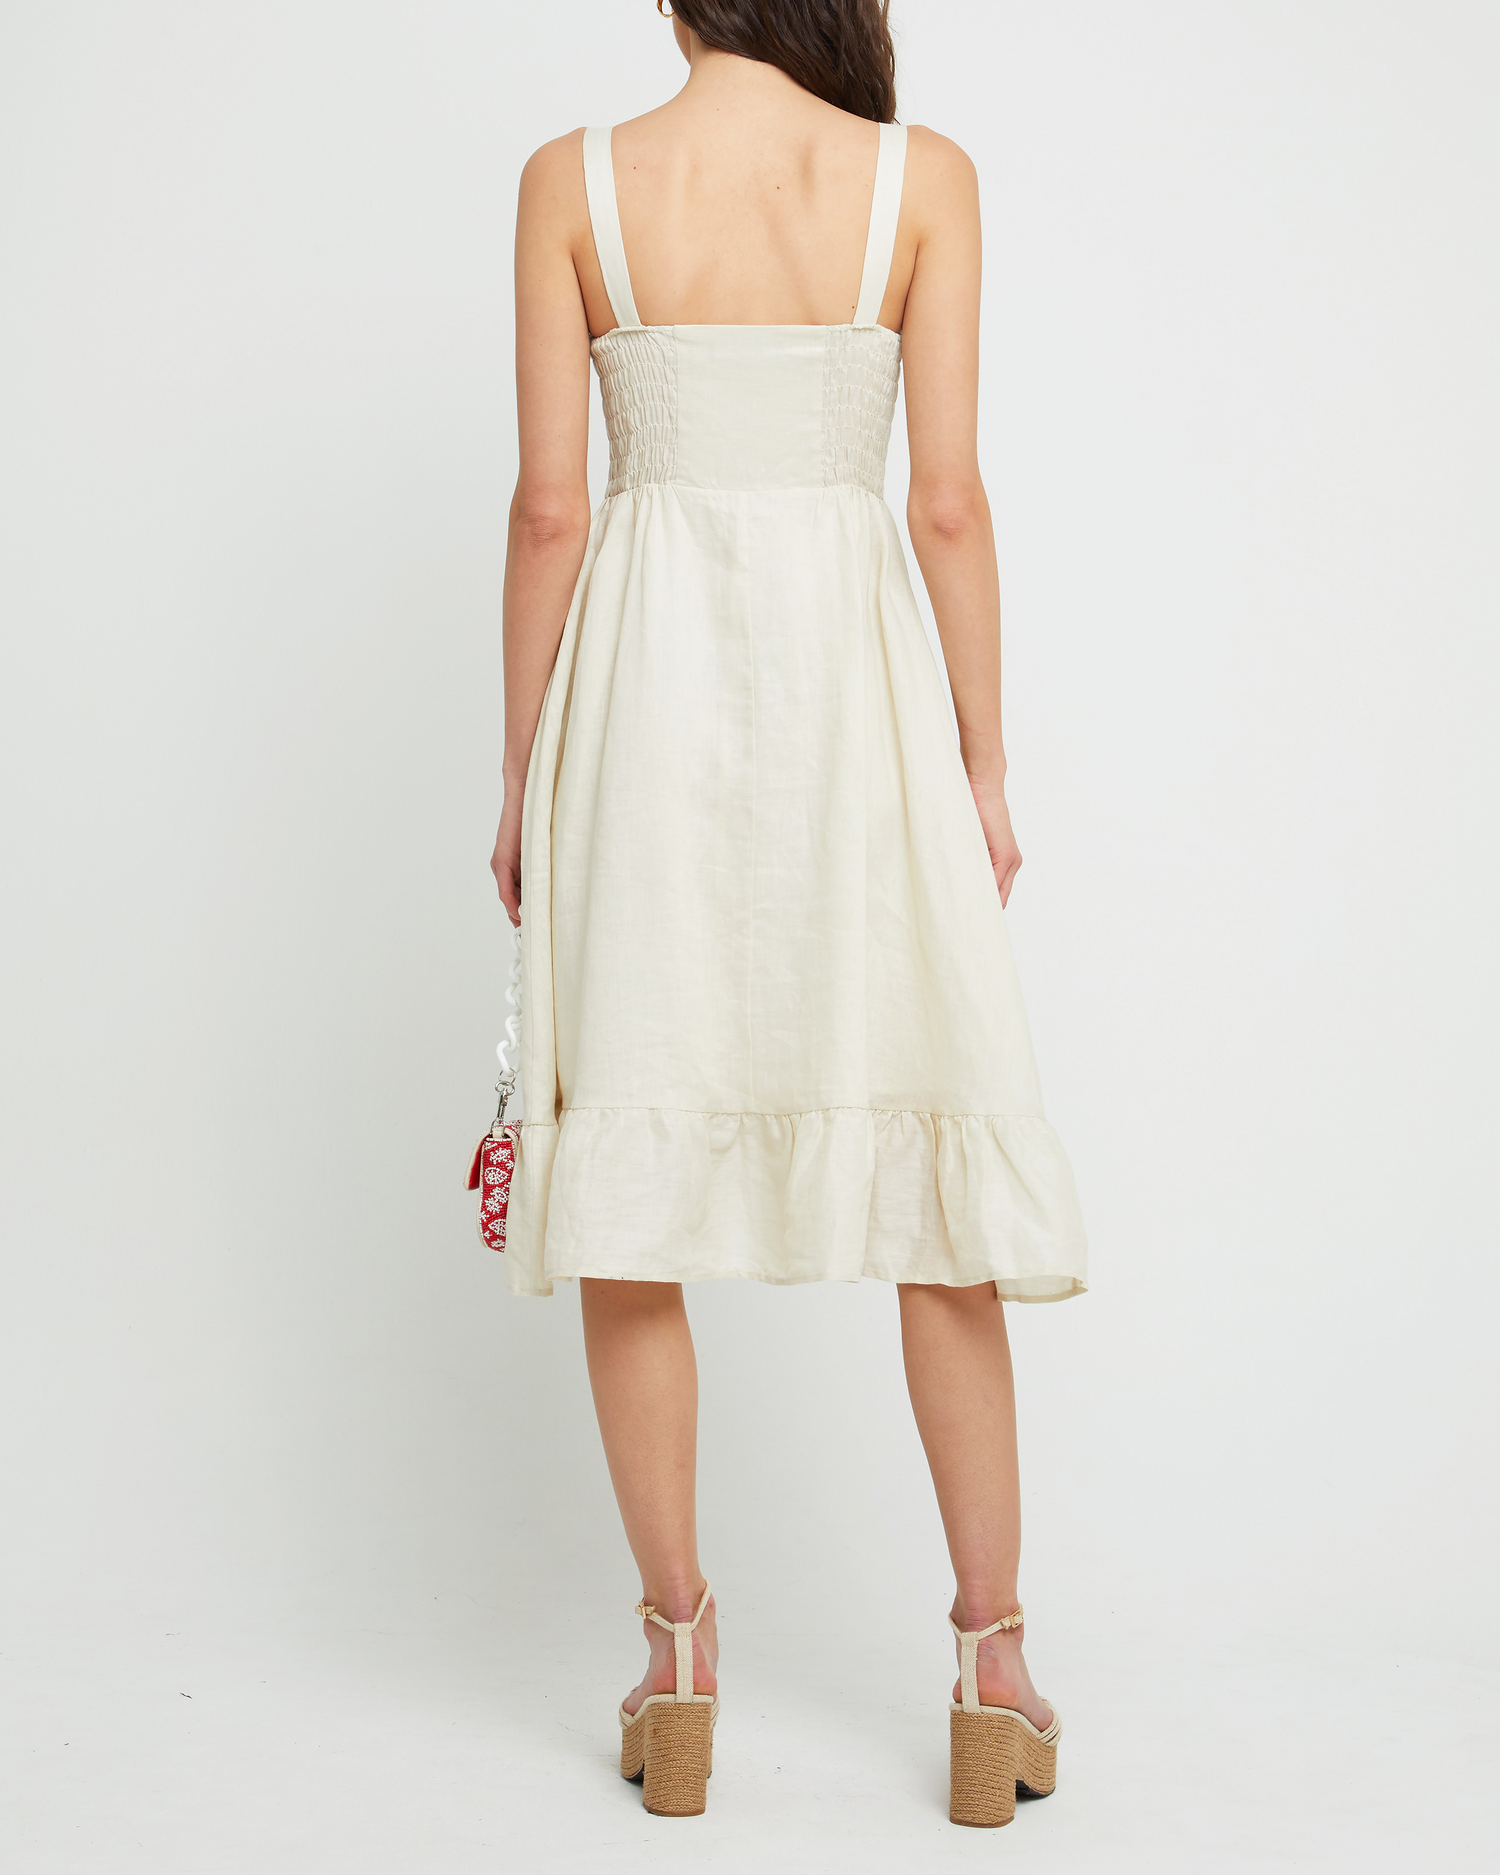 Second image of Merel Dress, a  midi dress, linen, bodice, tank, sleeveless